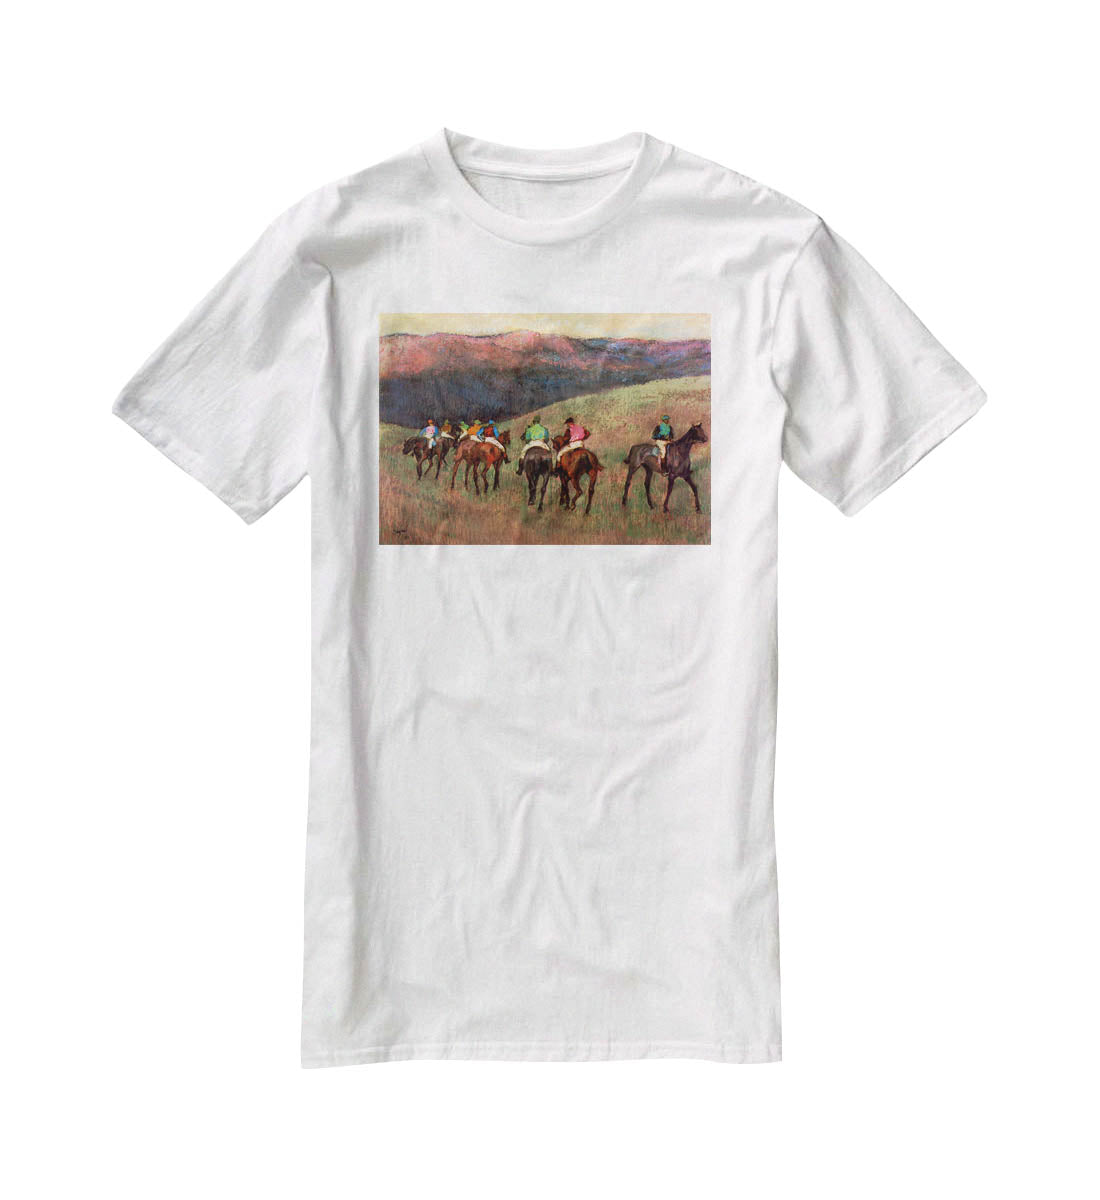 Jockeys in Training by Degas T-Shirt - Canvas Art Rocks - 5